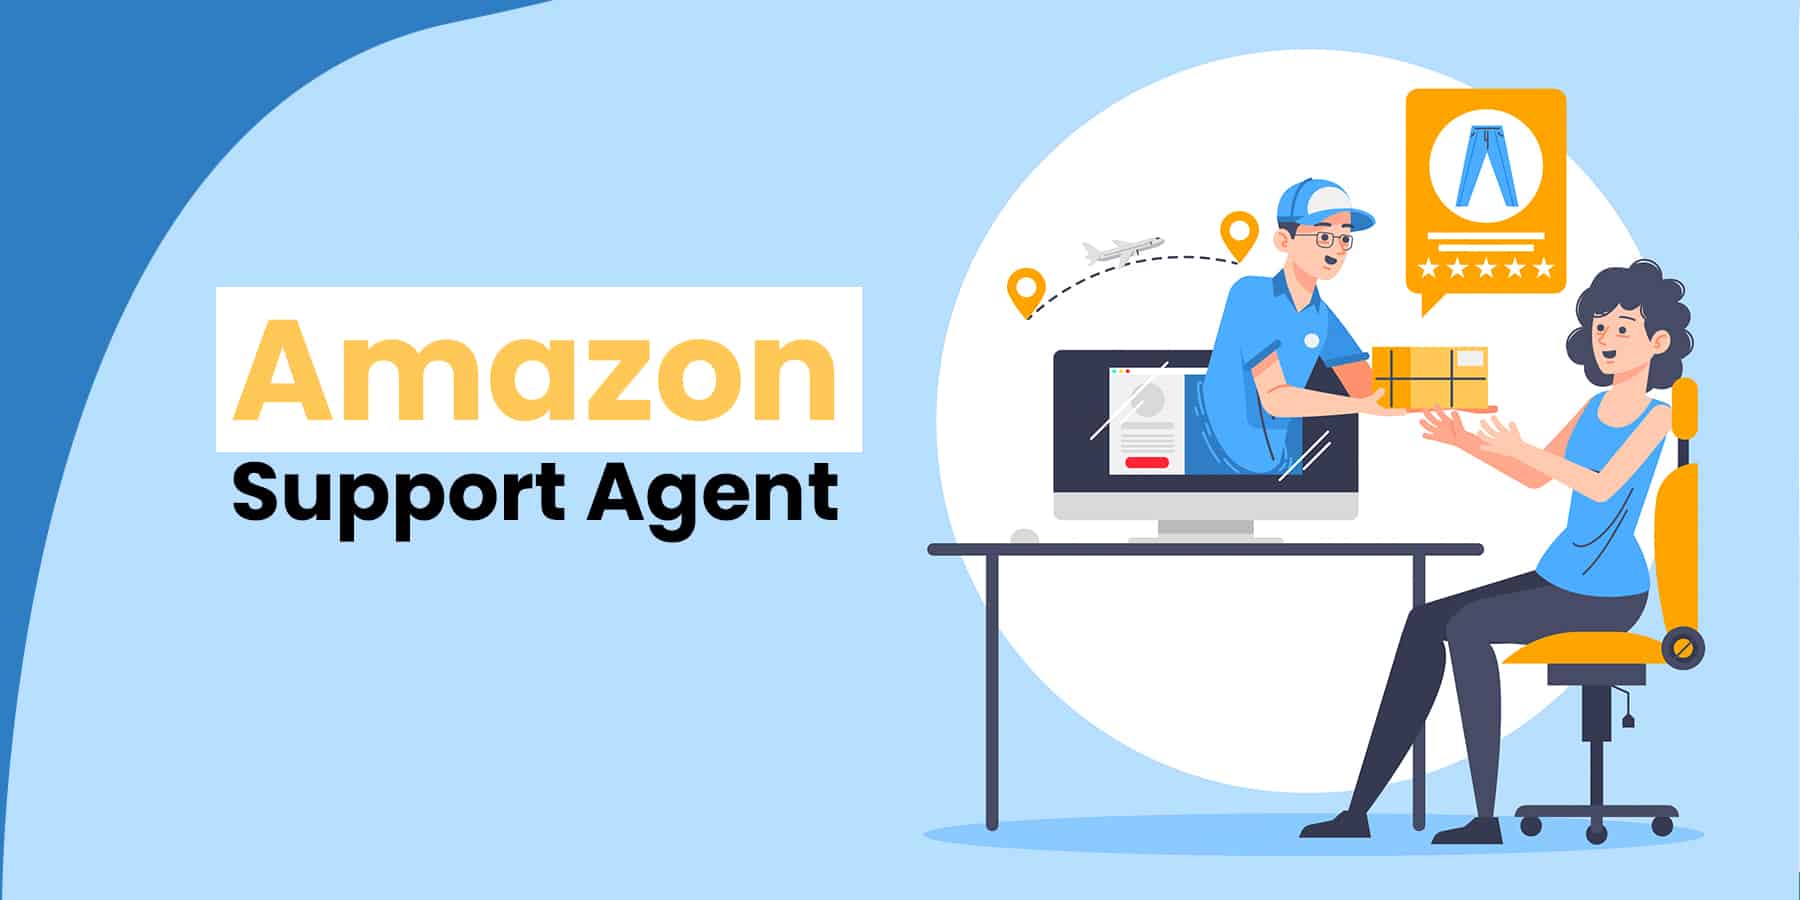 Amazon Support Agent